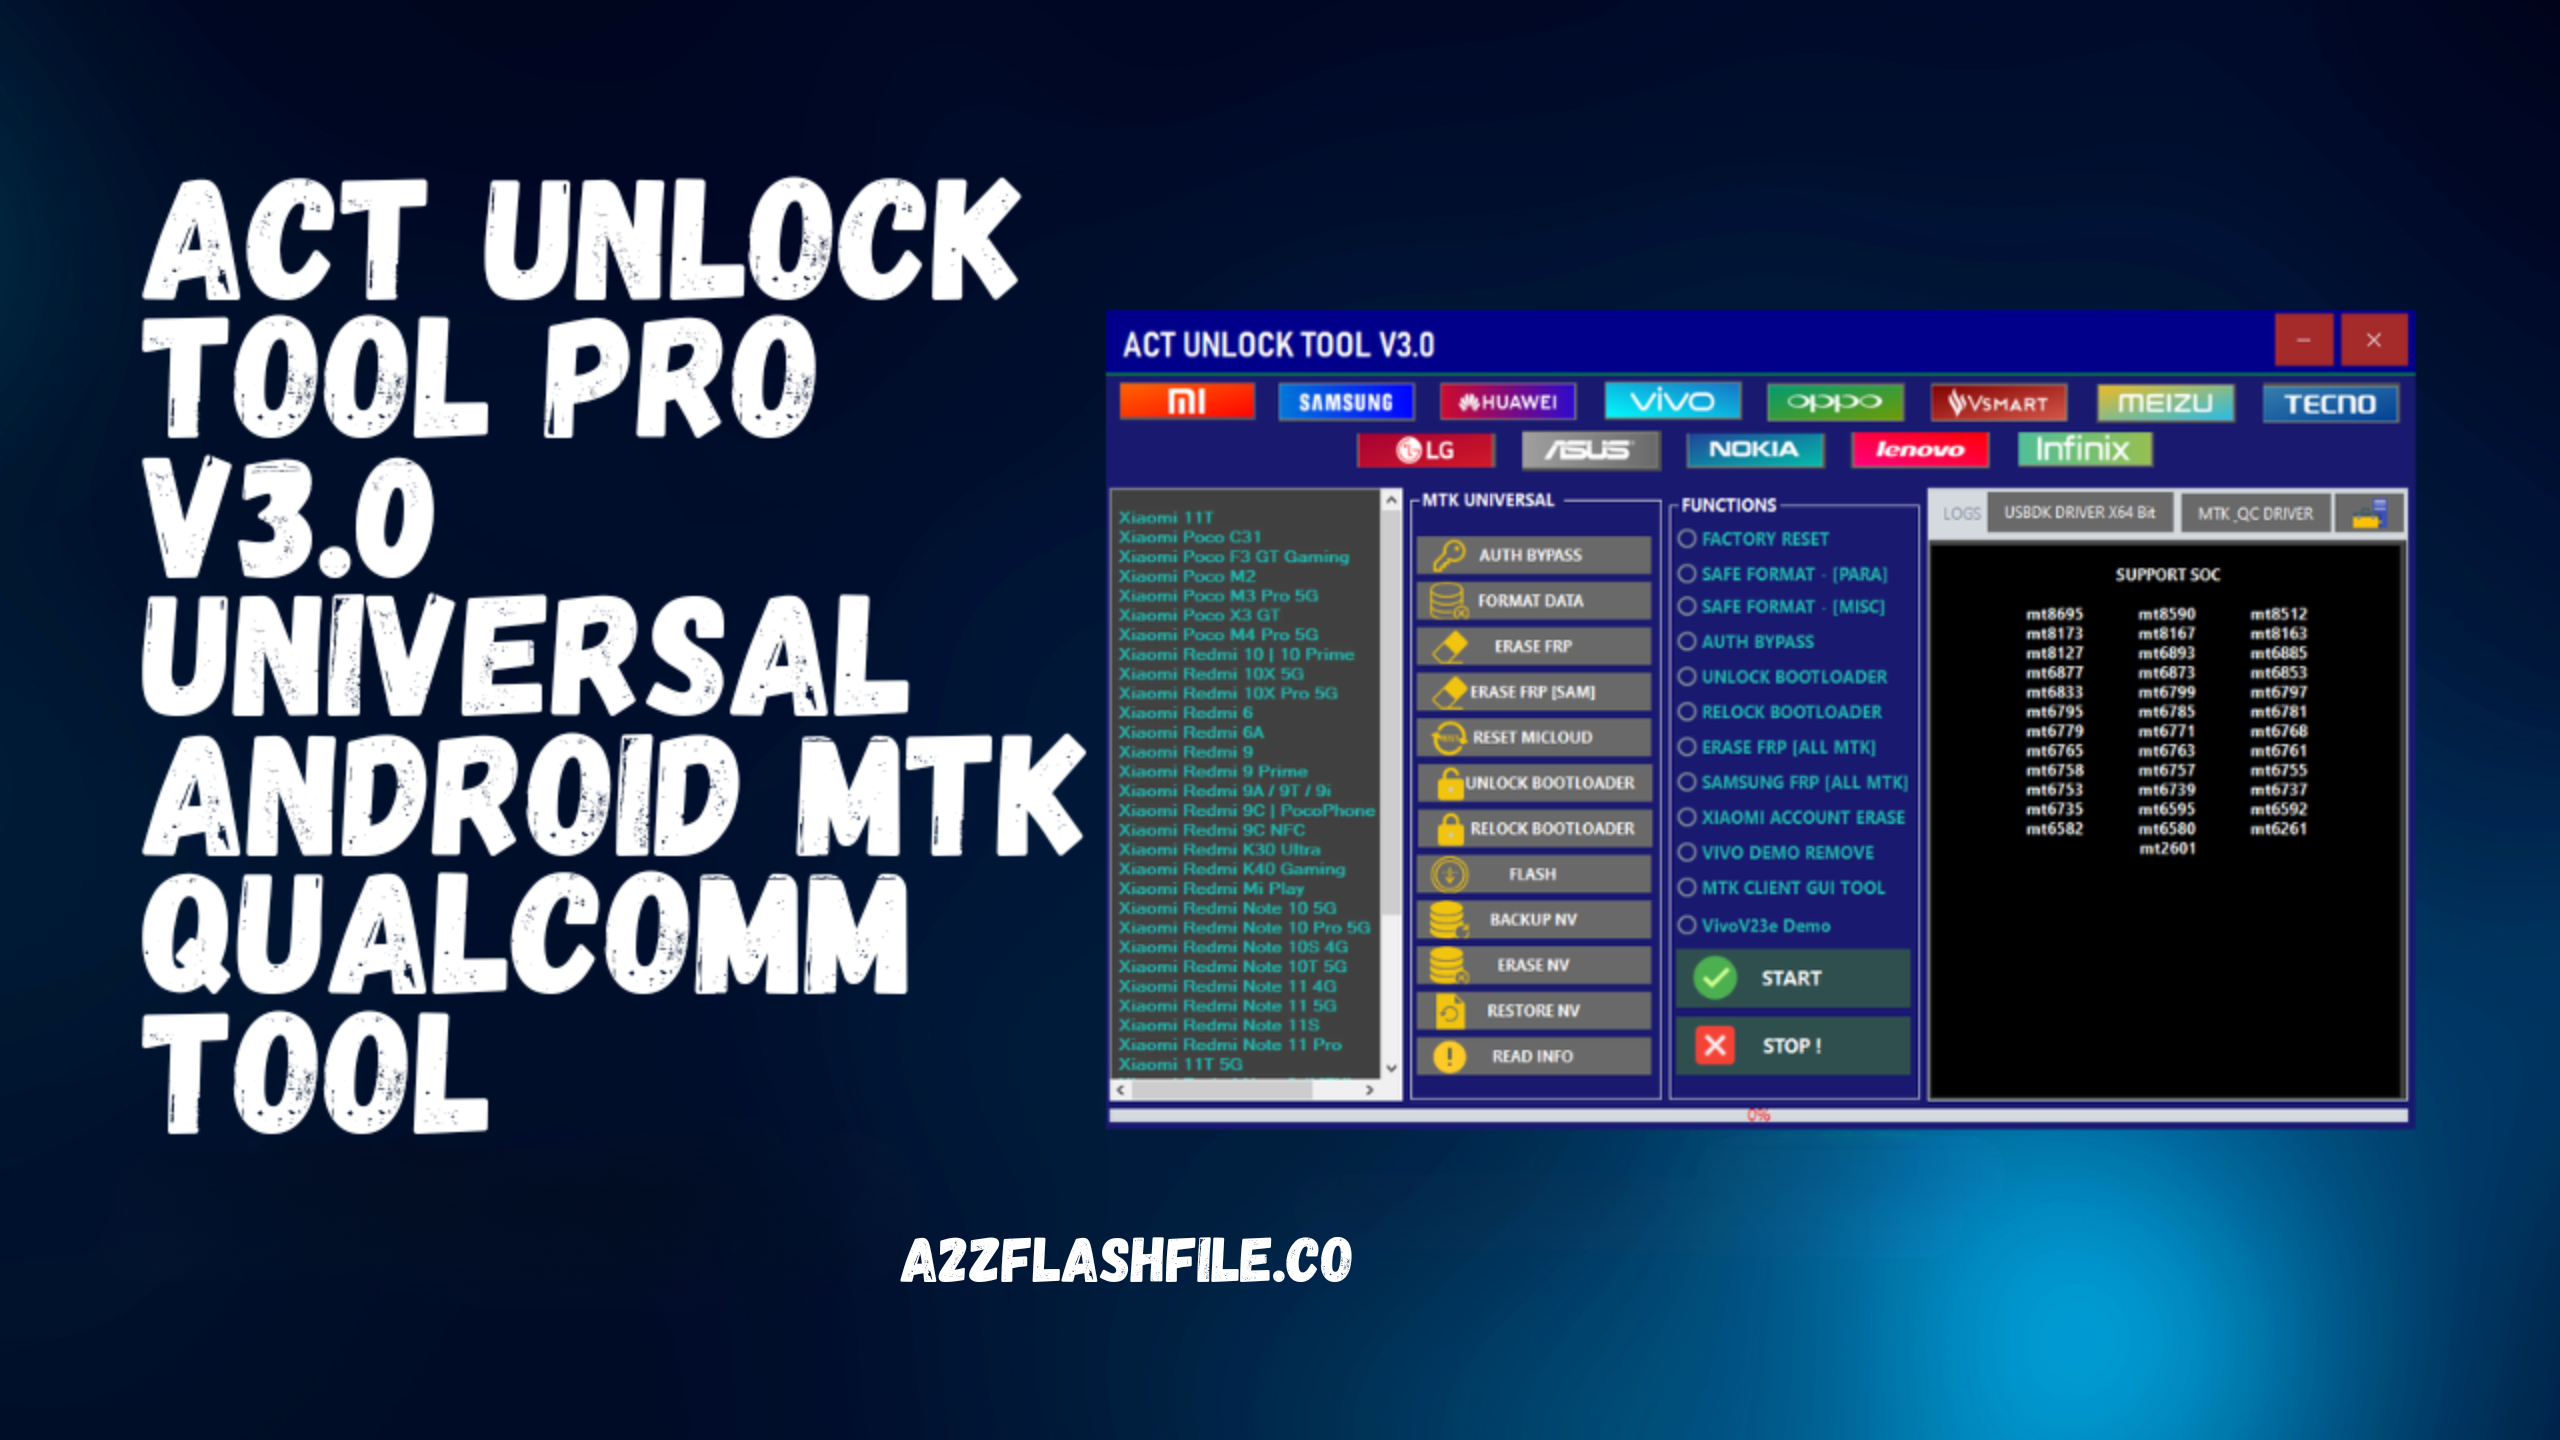 ACT Unlock Tool V3 Universal Android MTK Qualcomm Latest Tool